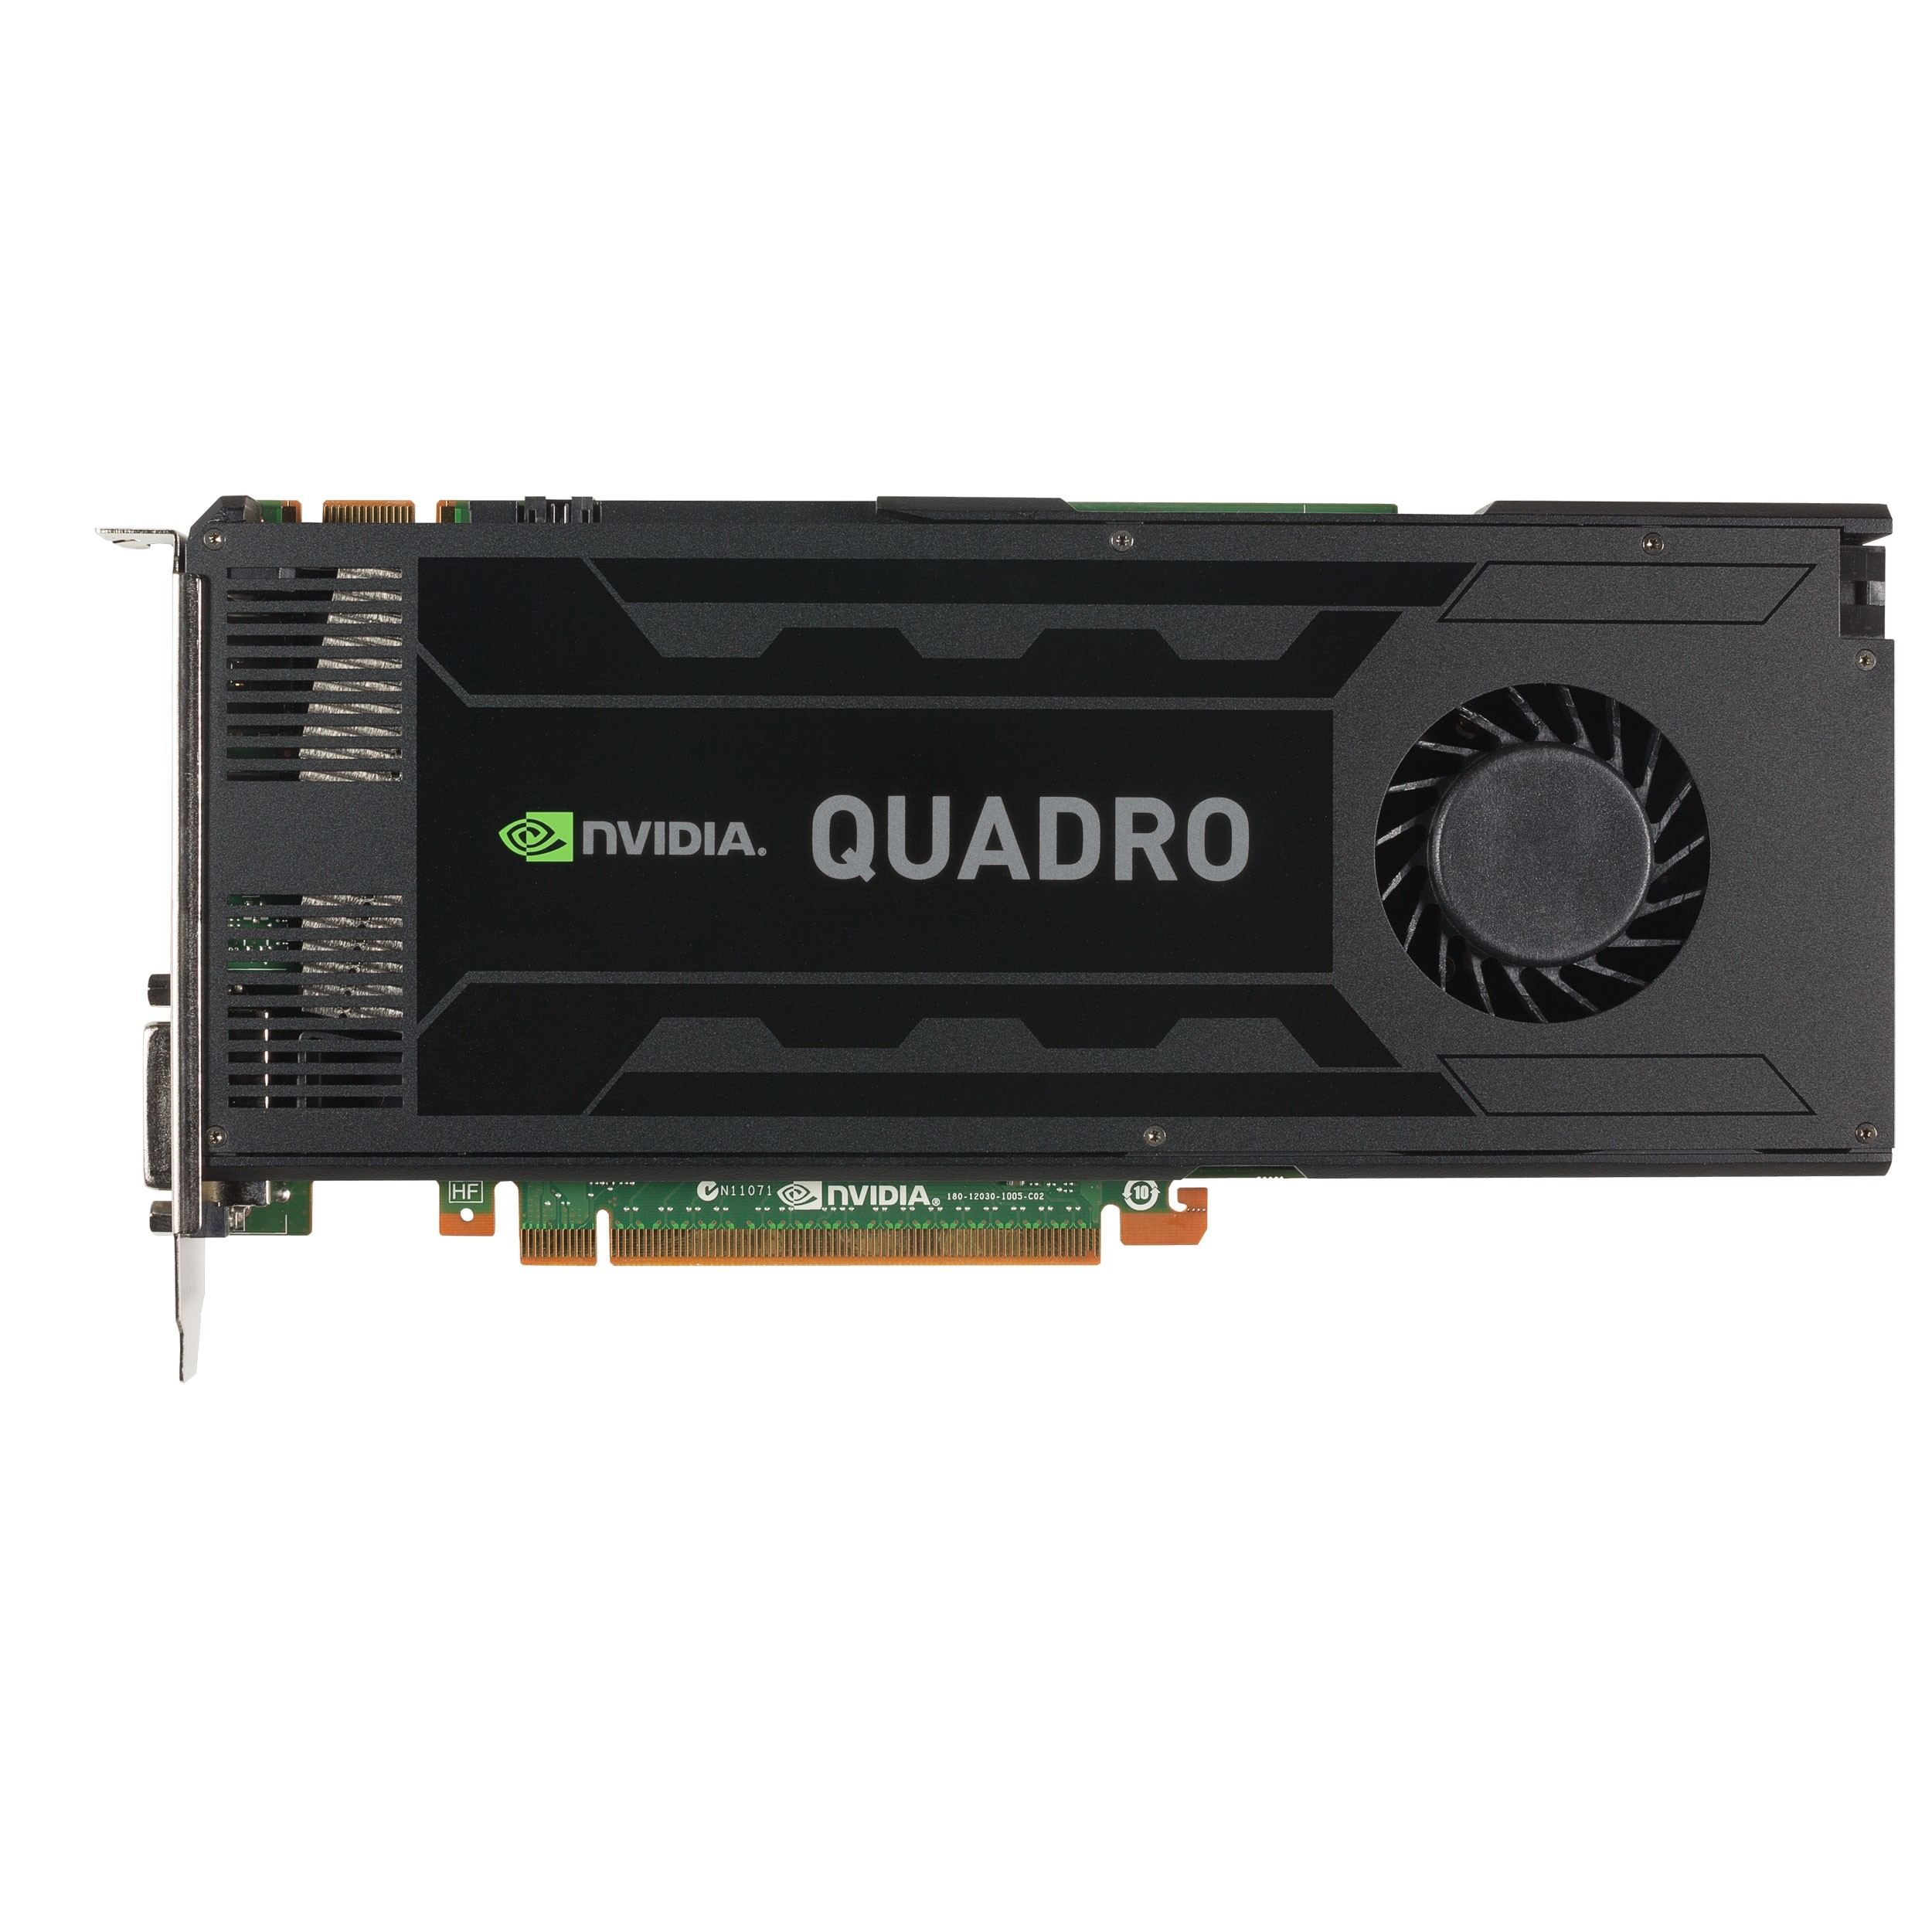 nVidia Quadro K4000 3GB GDDR5 PCIe x16 